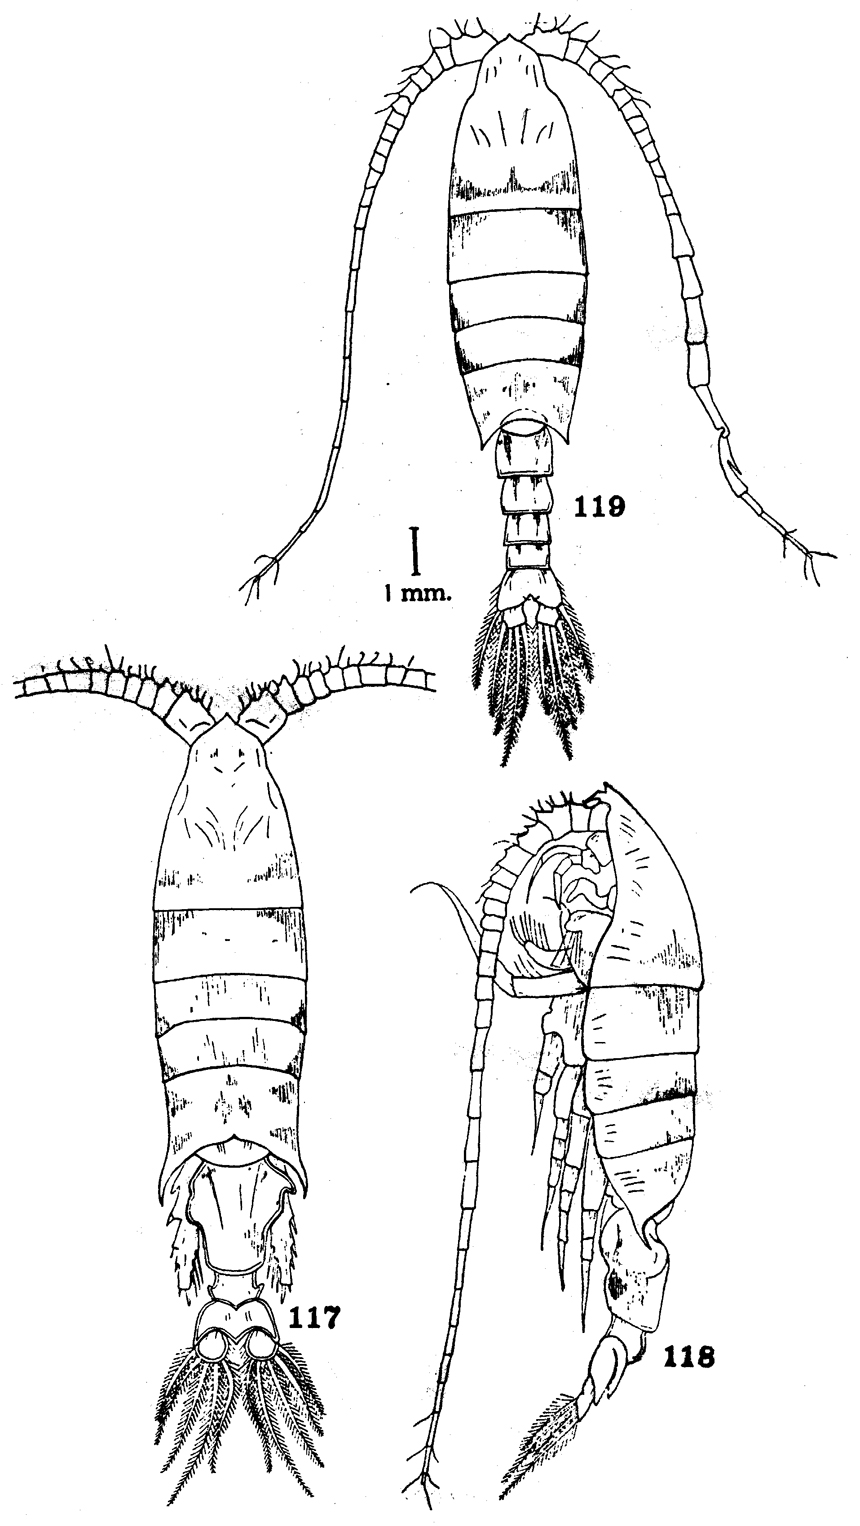 Species Gaussia princeps - Plate 23 of morphological figures